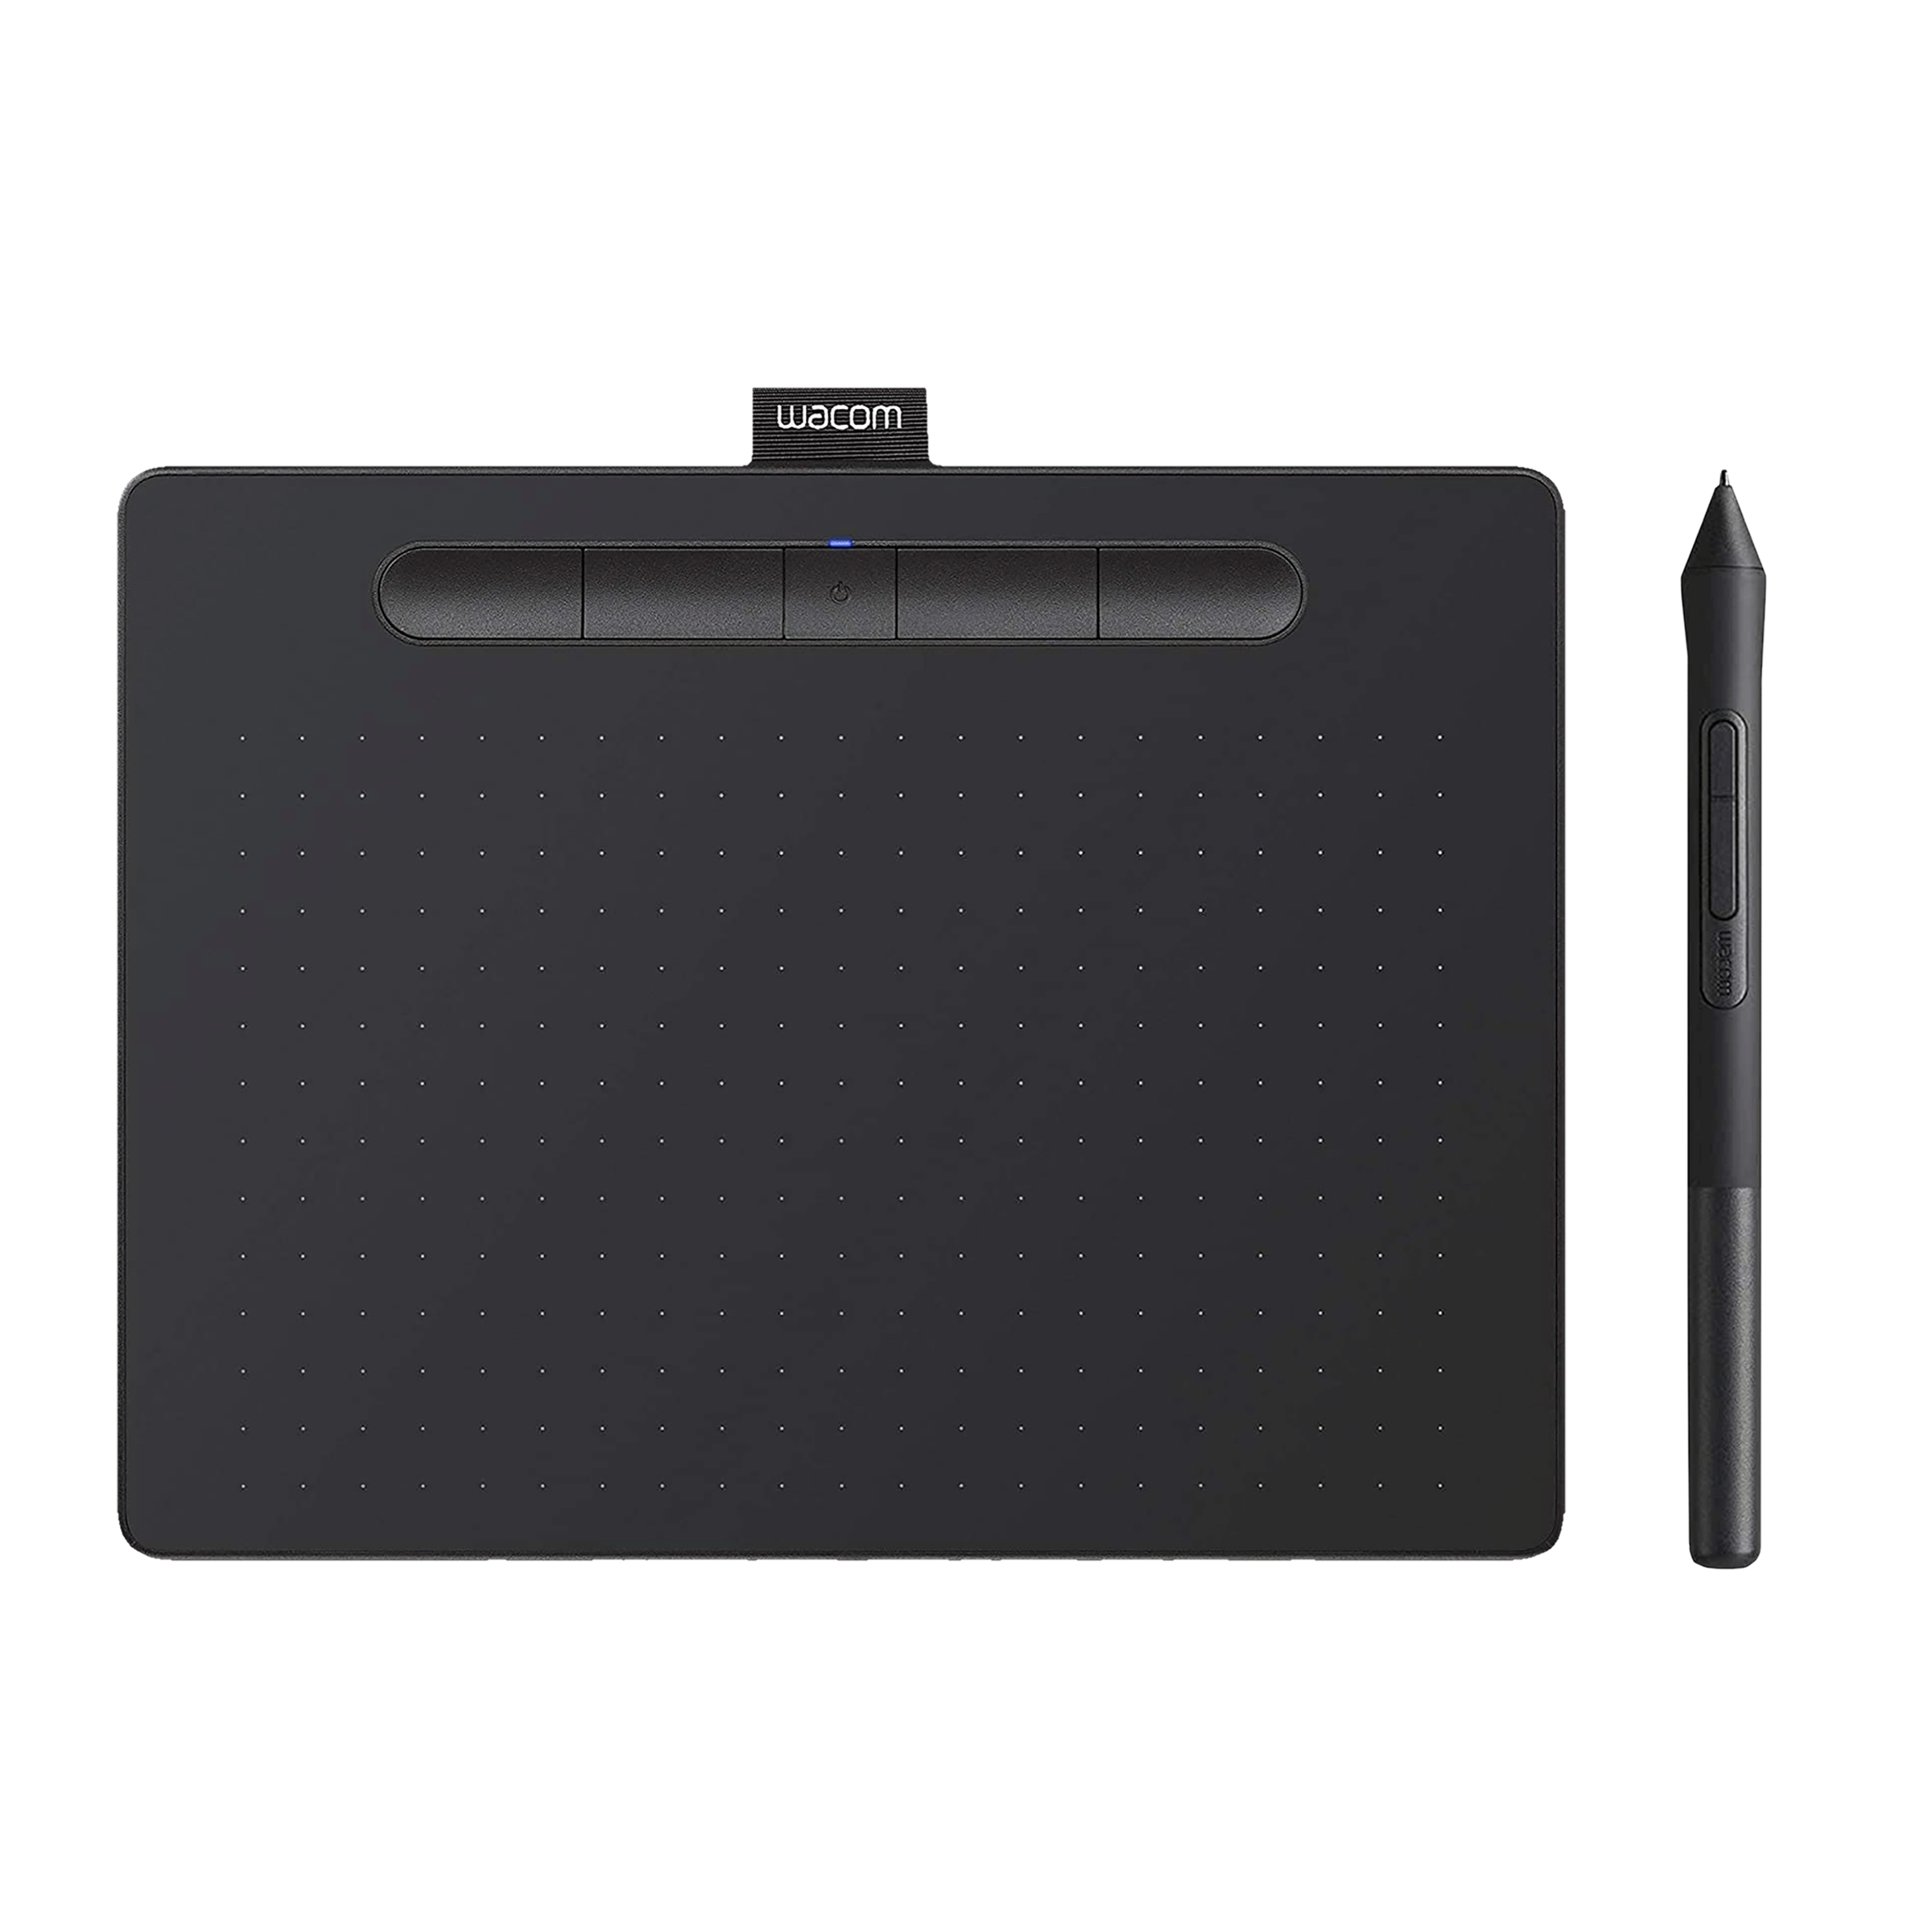 Wacom Intuos Medium Graphics Tablet (10 Inch, Black)